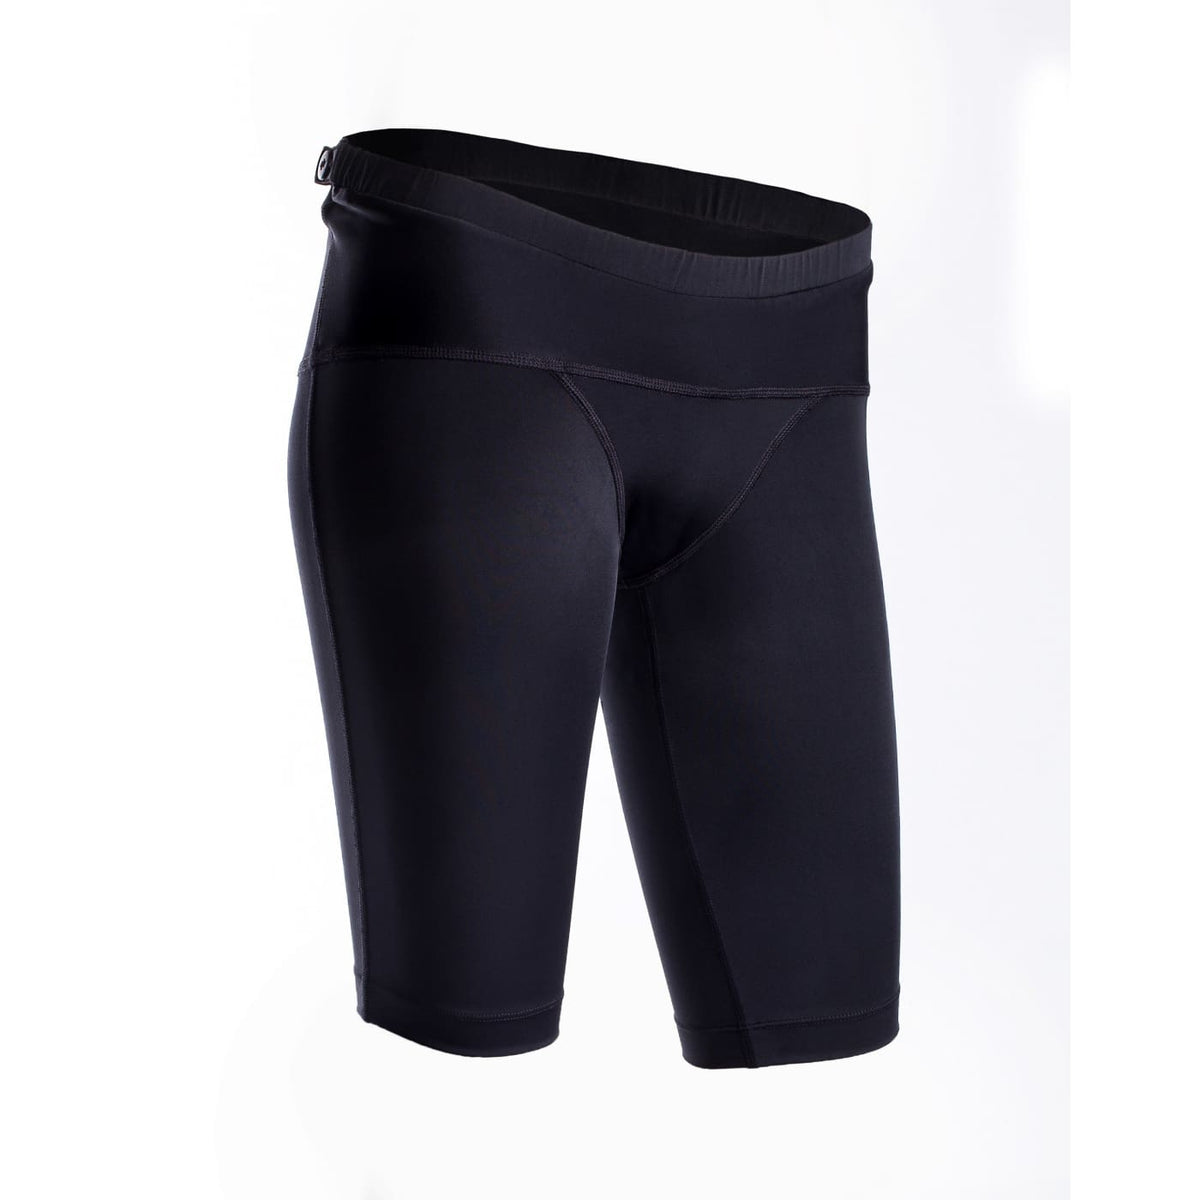 SRC Pregnancy Shorts - Black XL - FOR MUM - MATERNITY SUPPORT GARMENTS (PRE/POST)